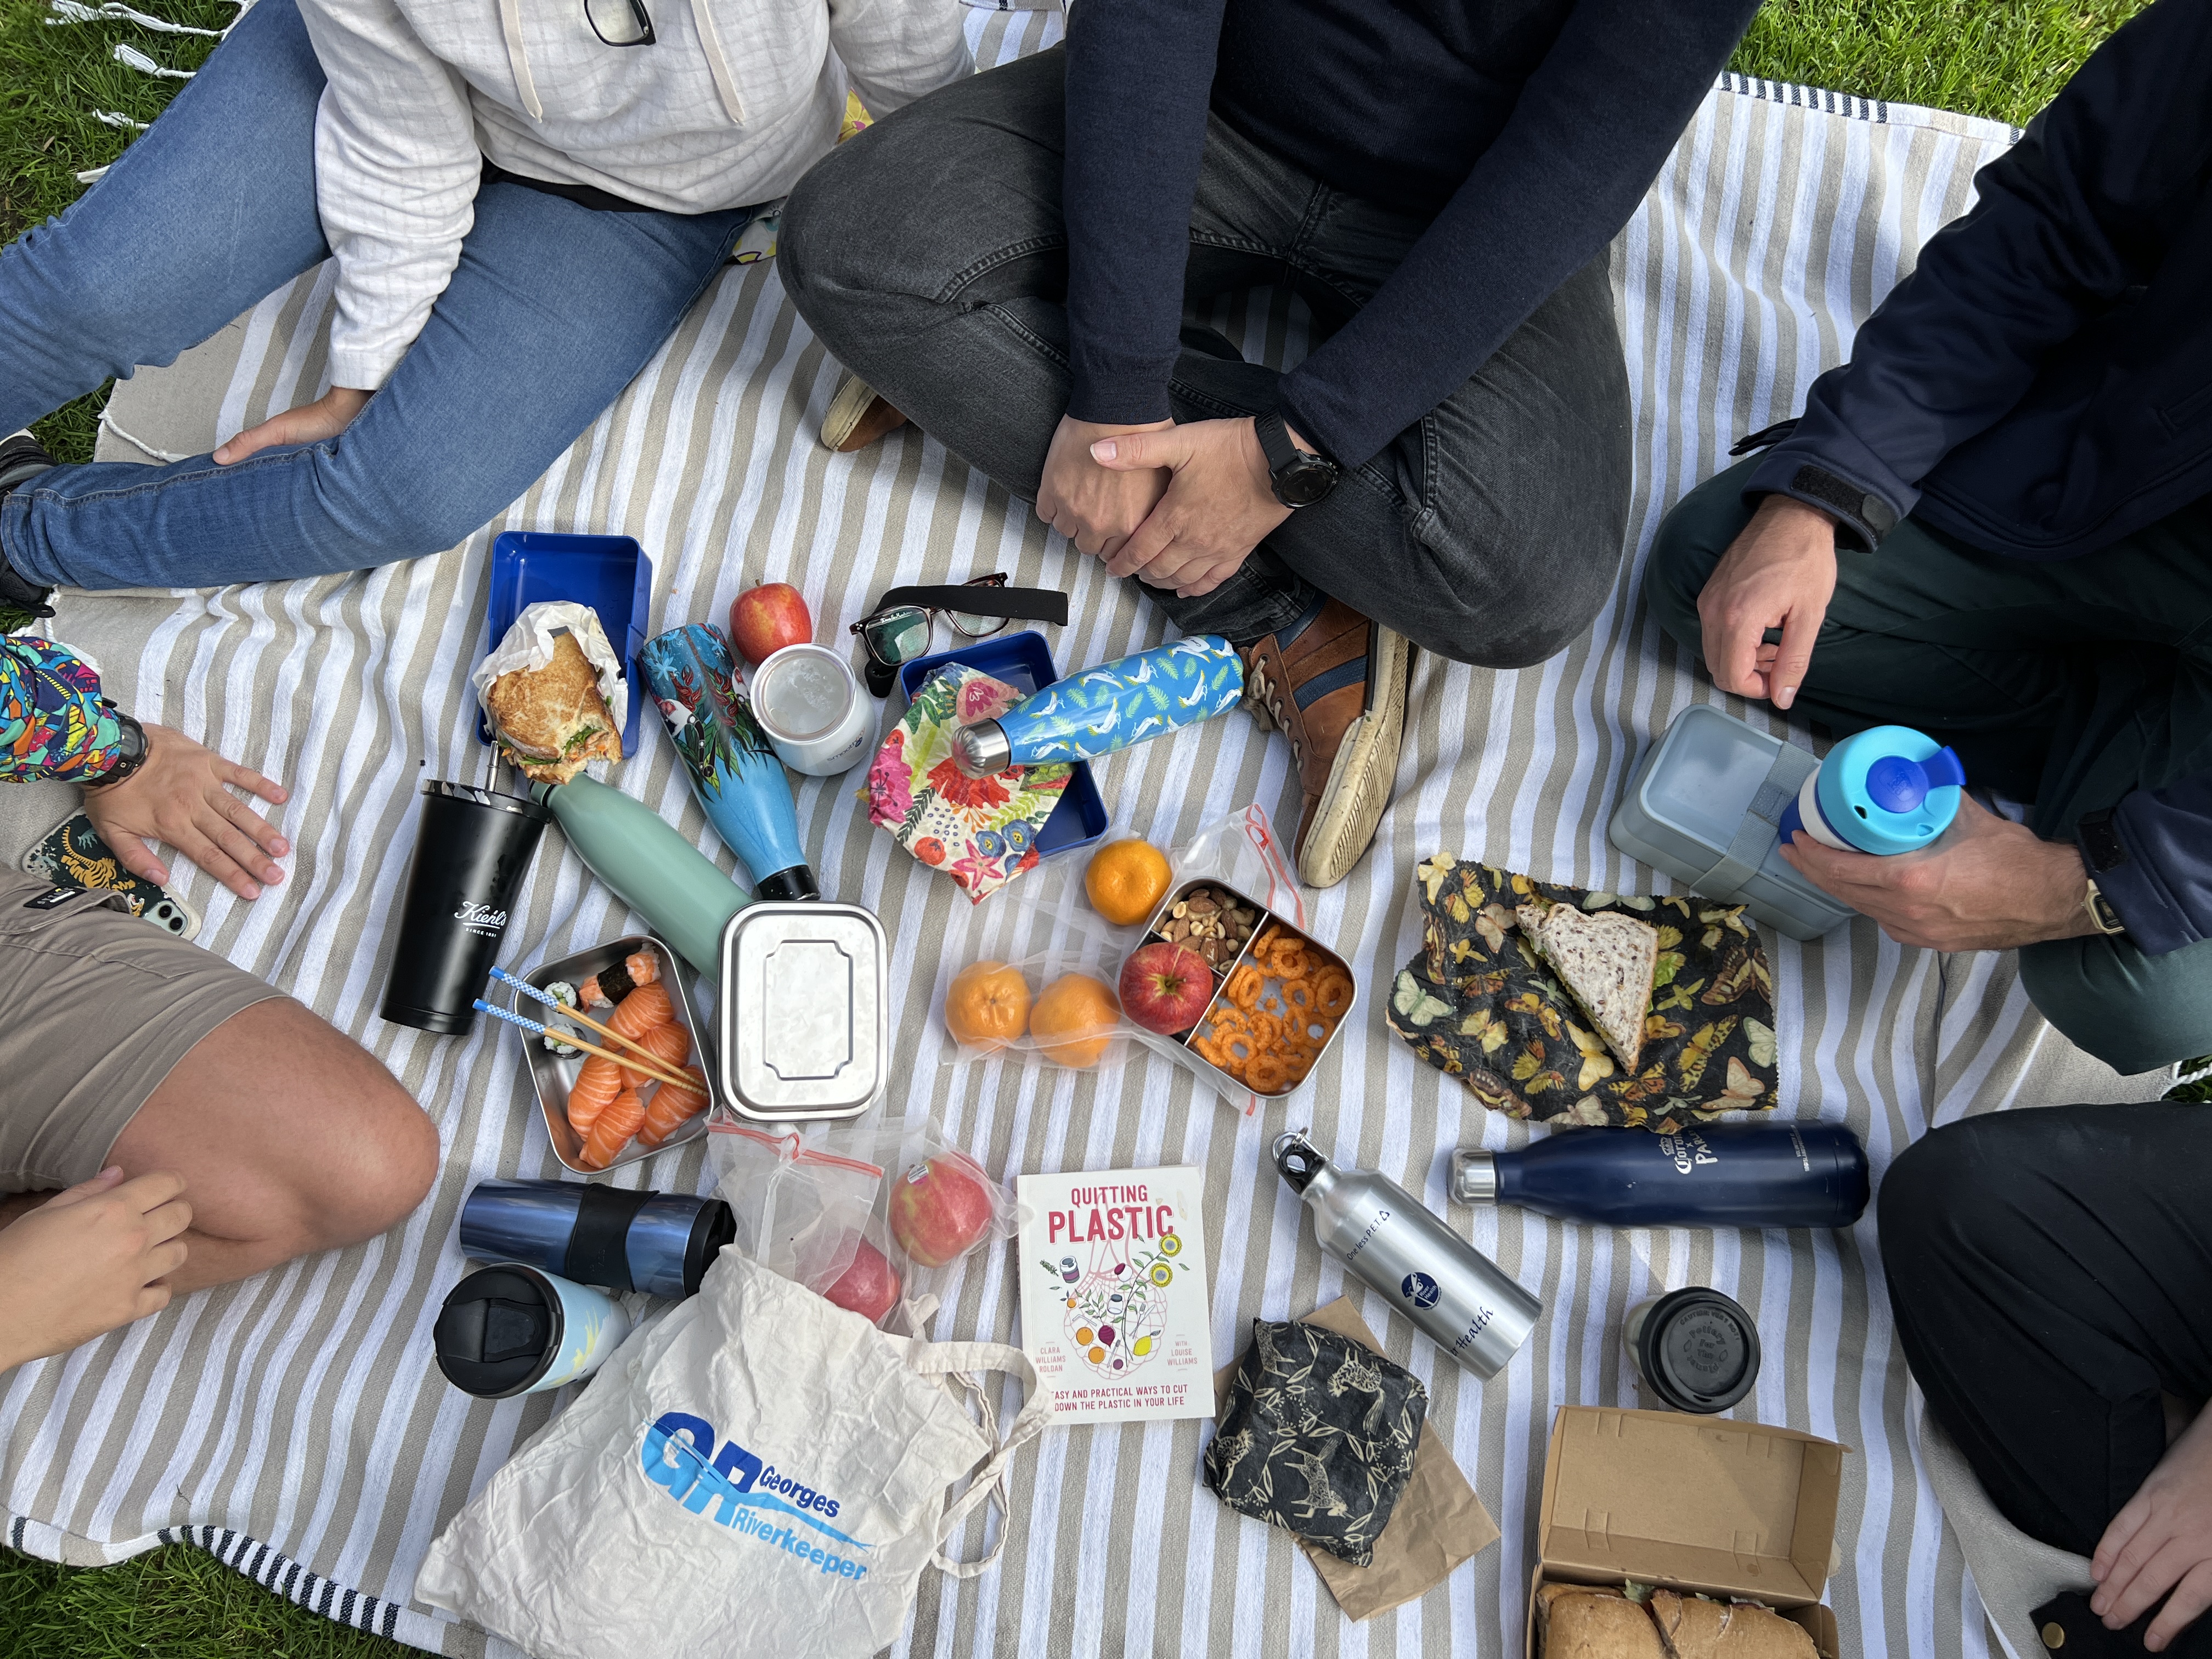 Plastic free picnic